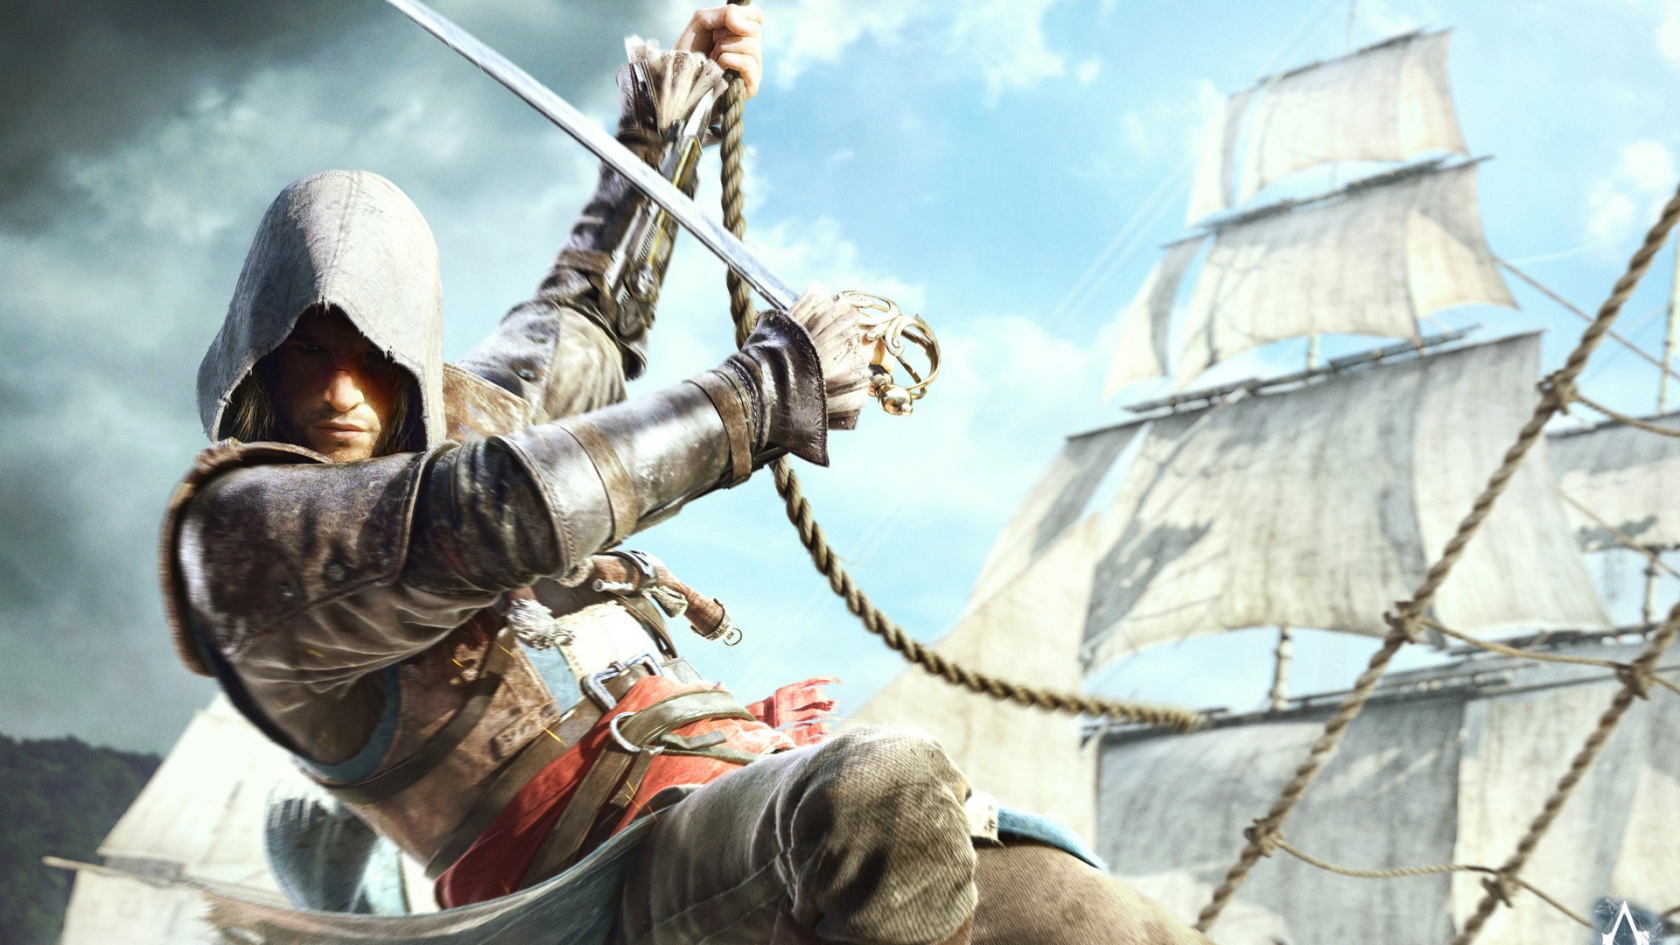 Assassin Creed 4 Black Flag for 1680 x 945 HDTV resolution